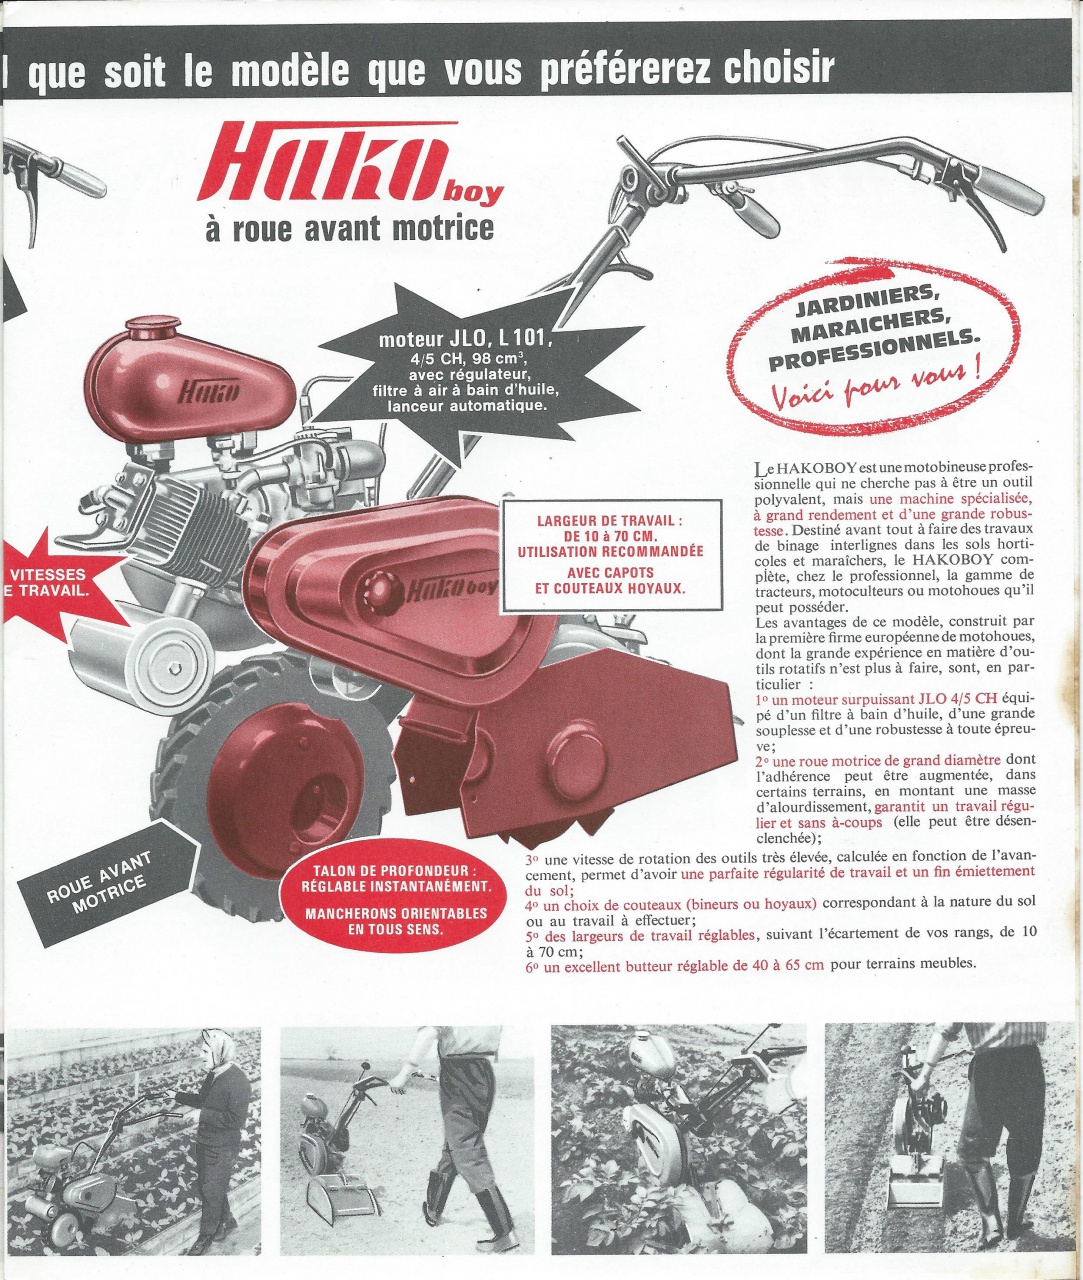 motoculteur - Quel est ce model de motoculteur svp? 729256HAKO004